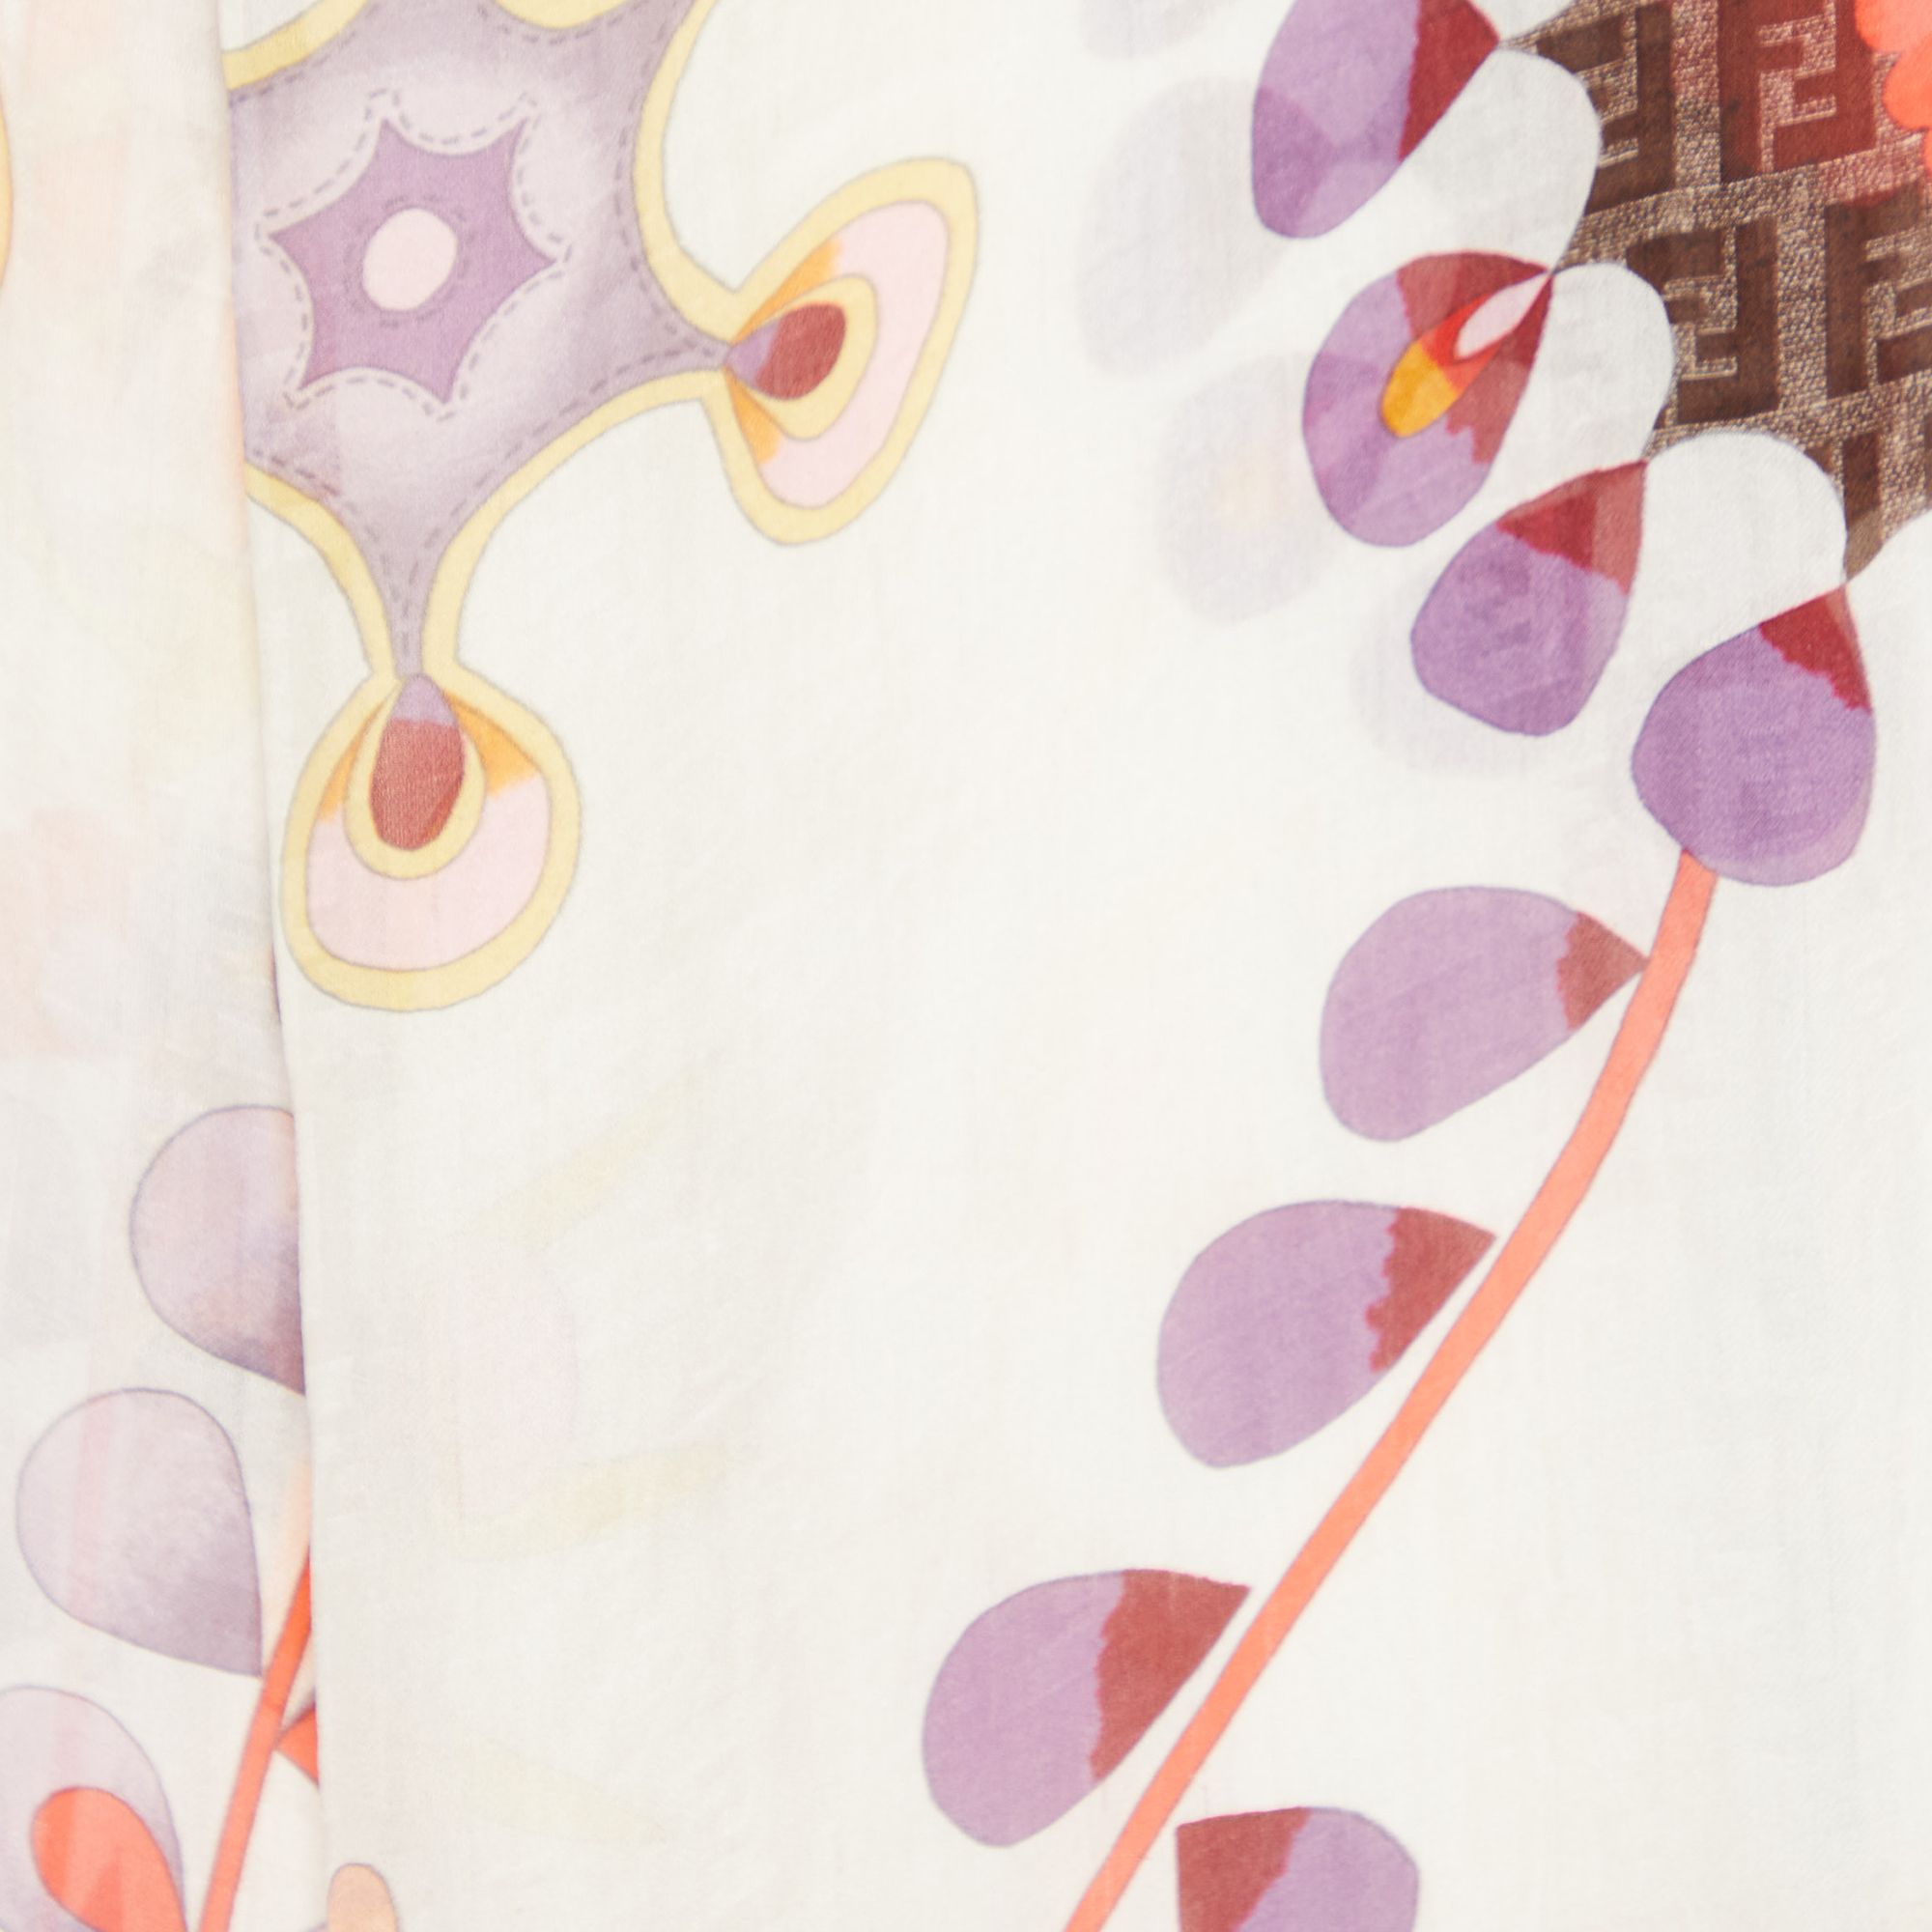 Fendi Multicolor Floral Printed Silk Stole